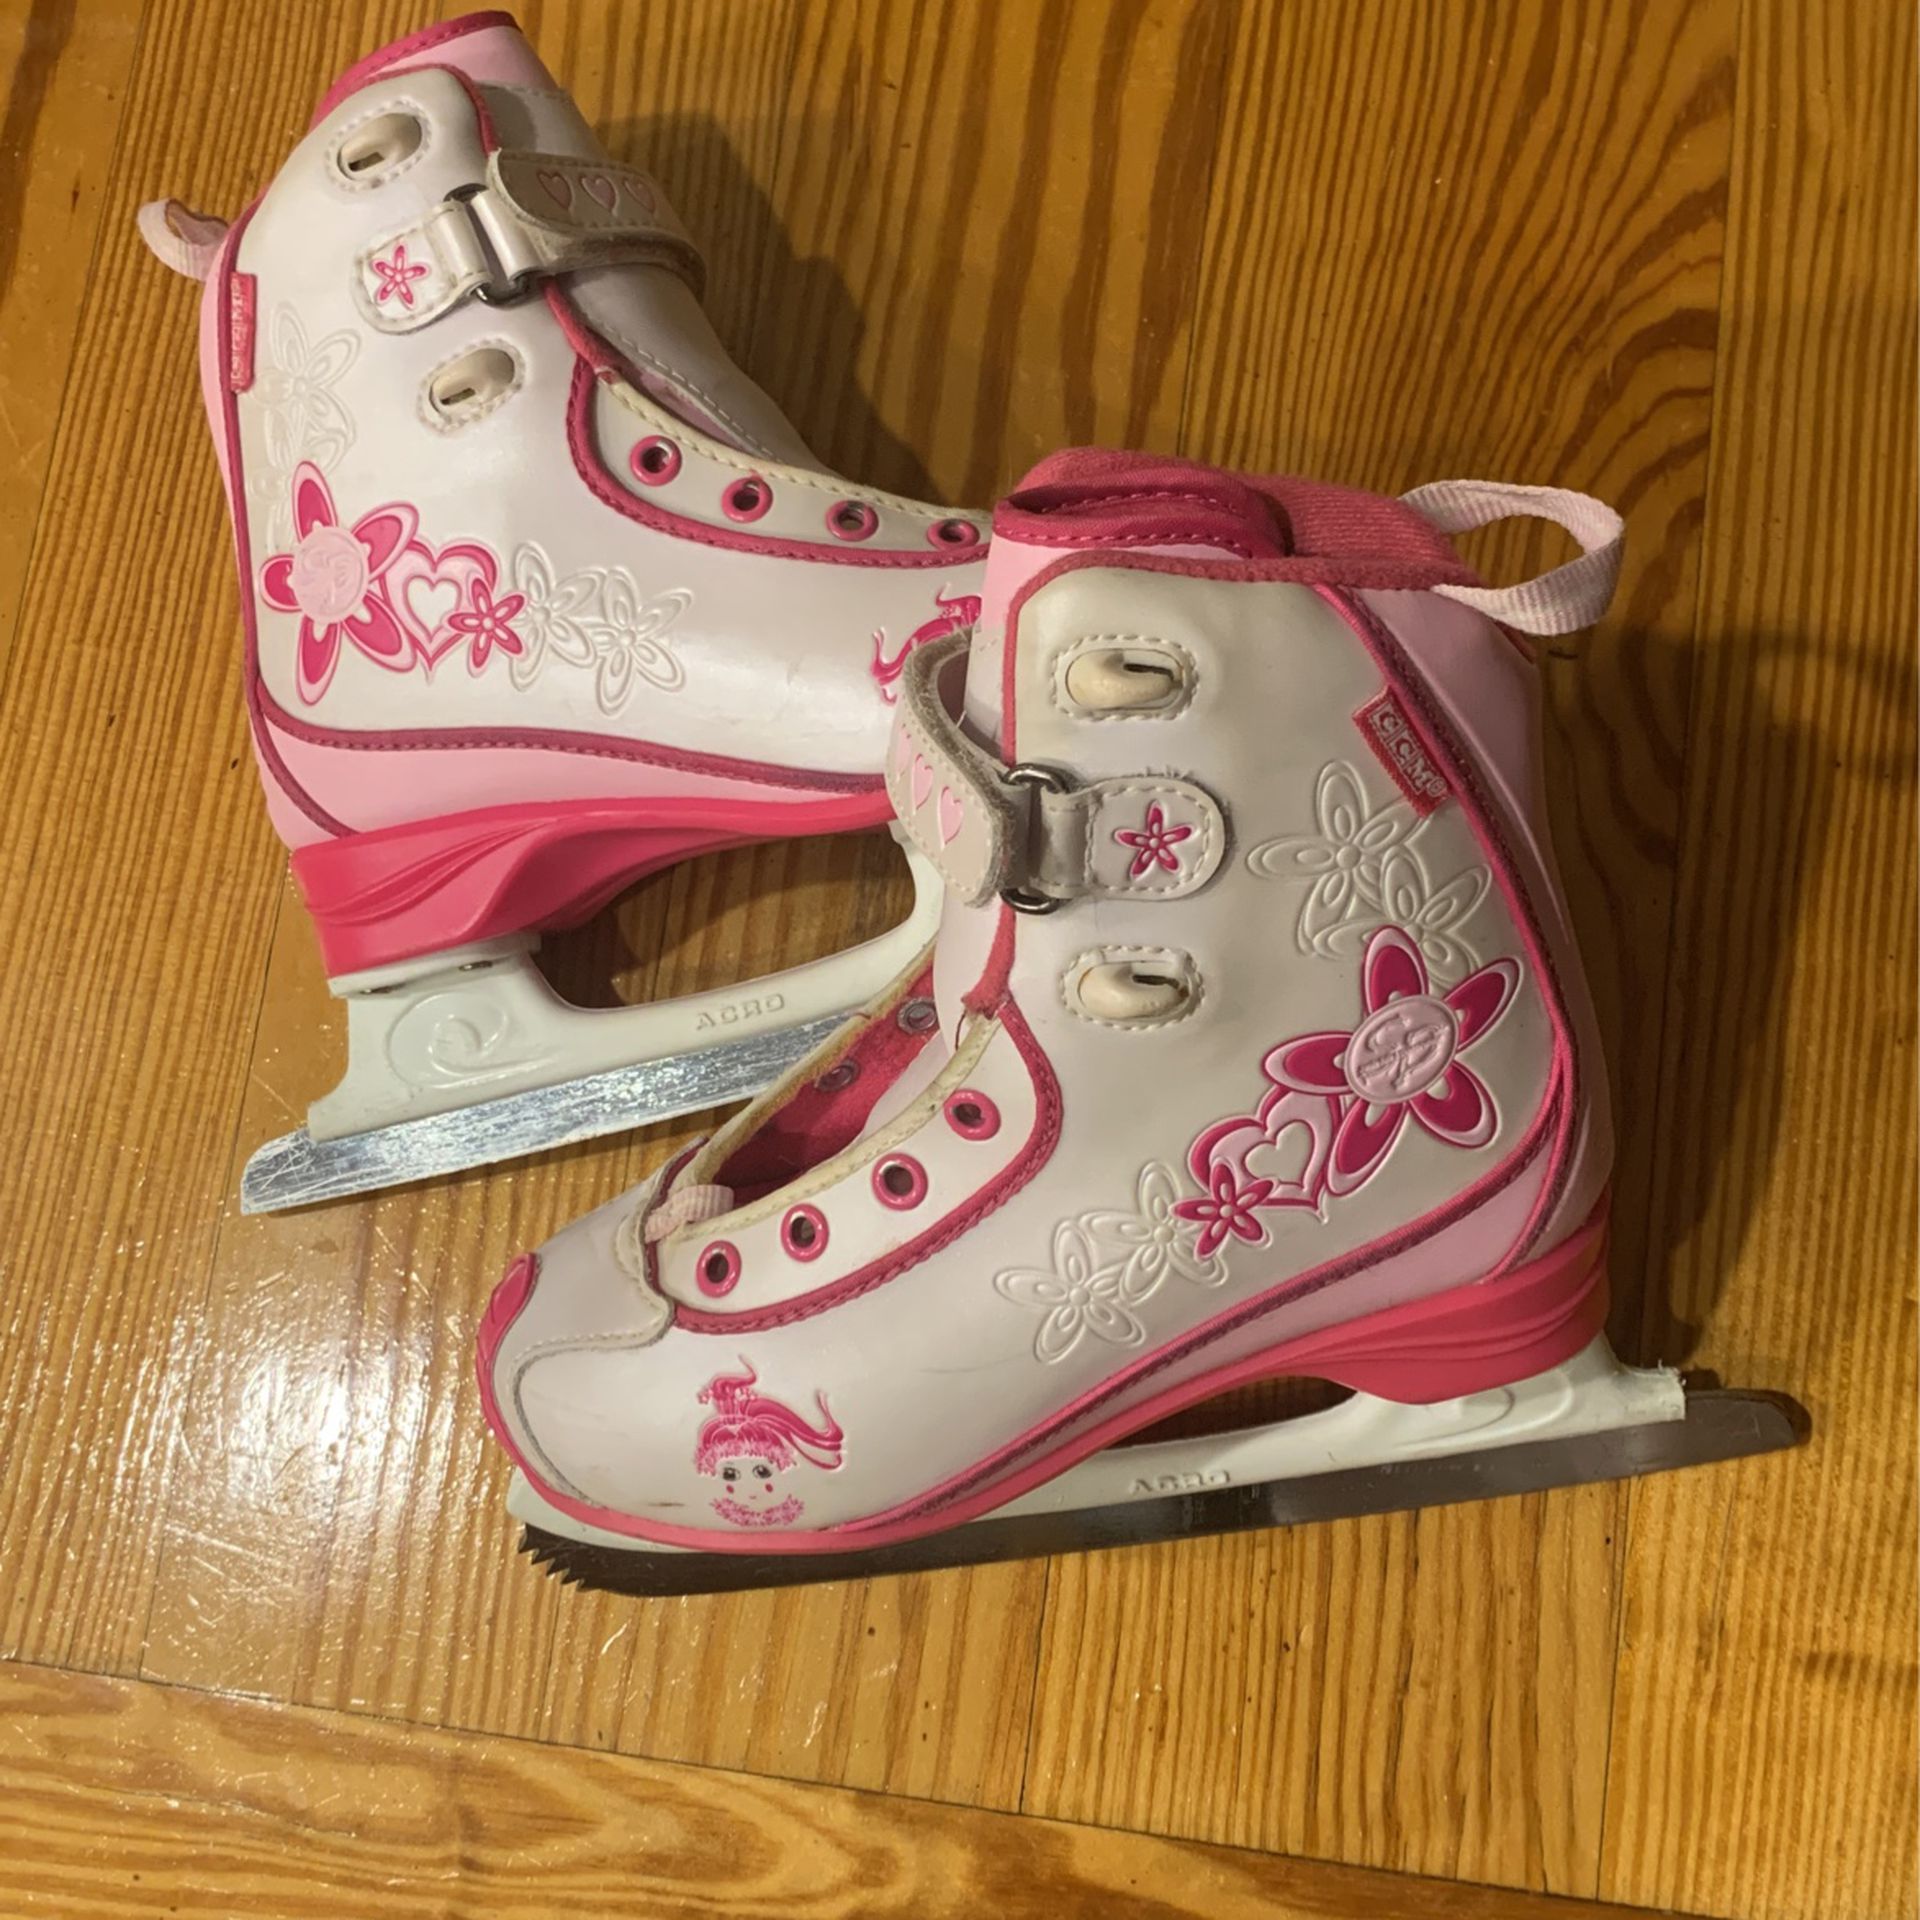 CCM Girls Ice Skates size 1